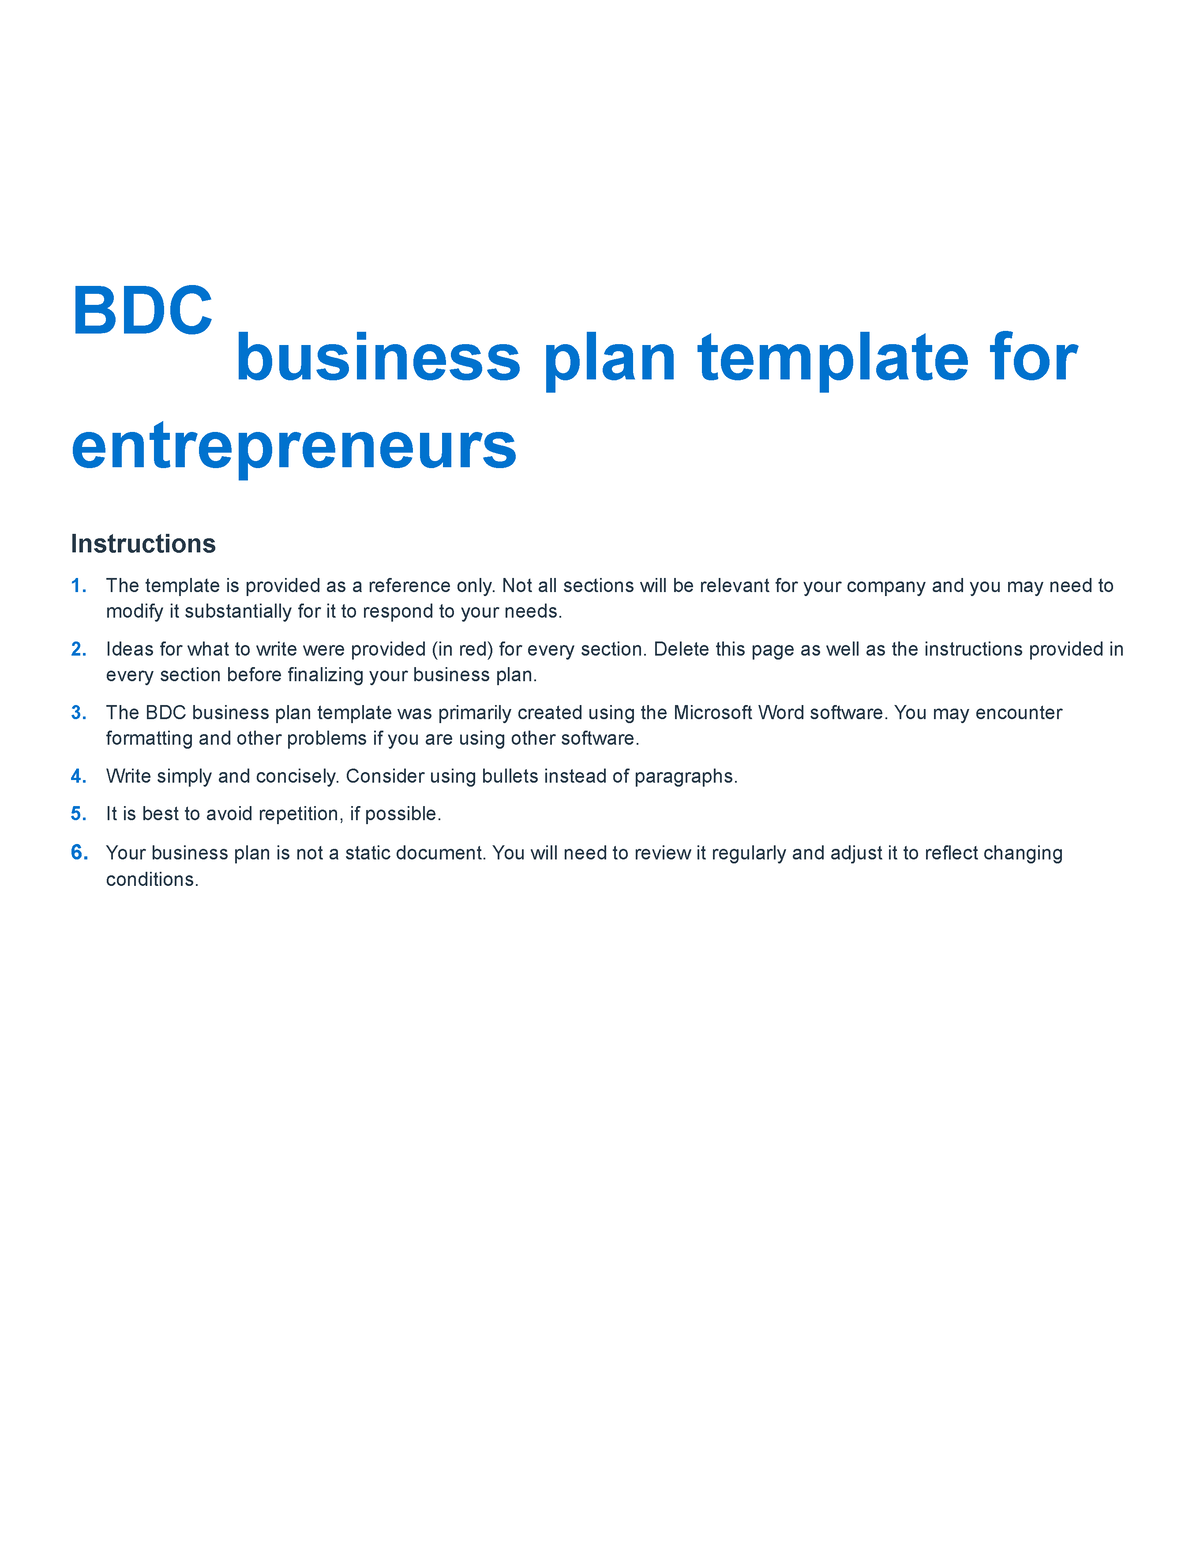 bdc business plan template download